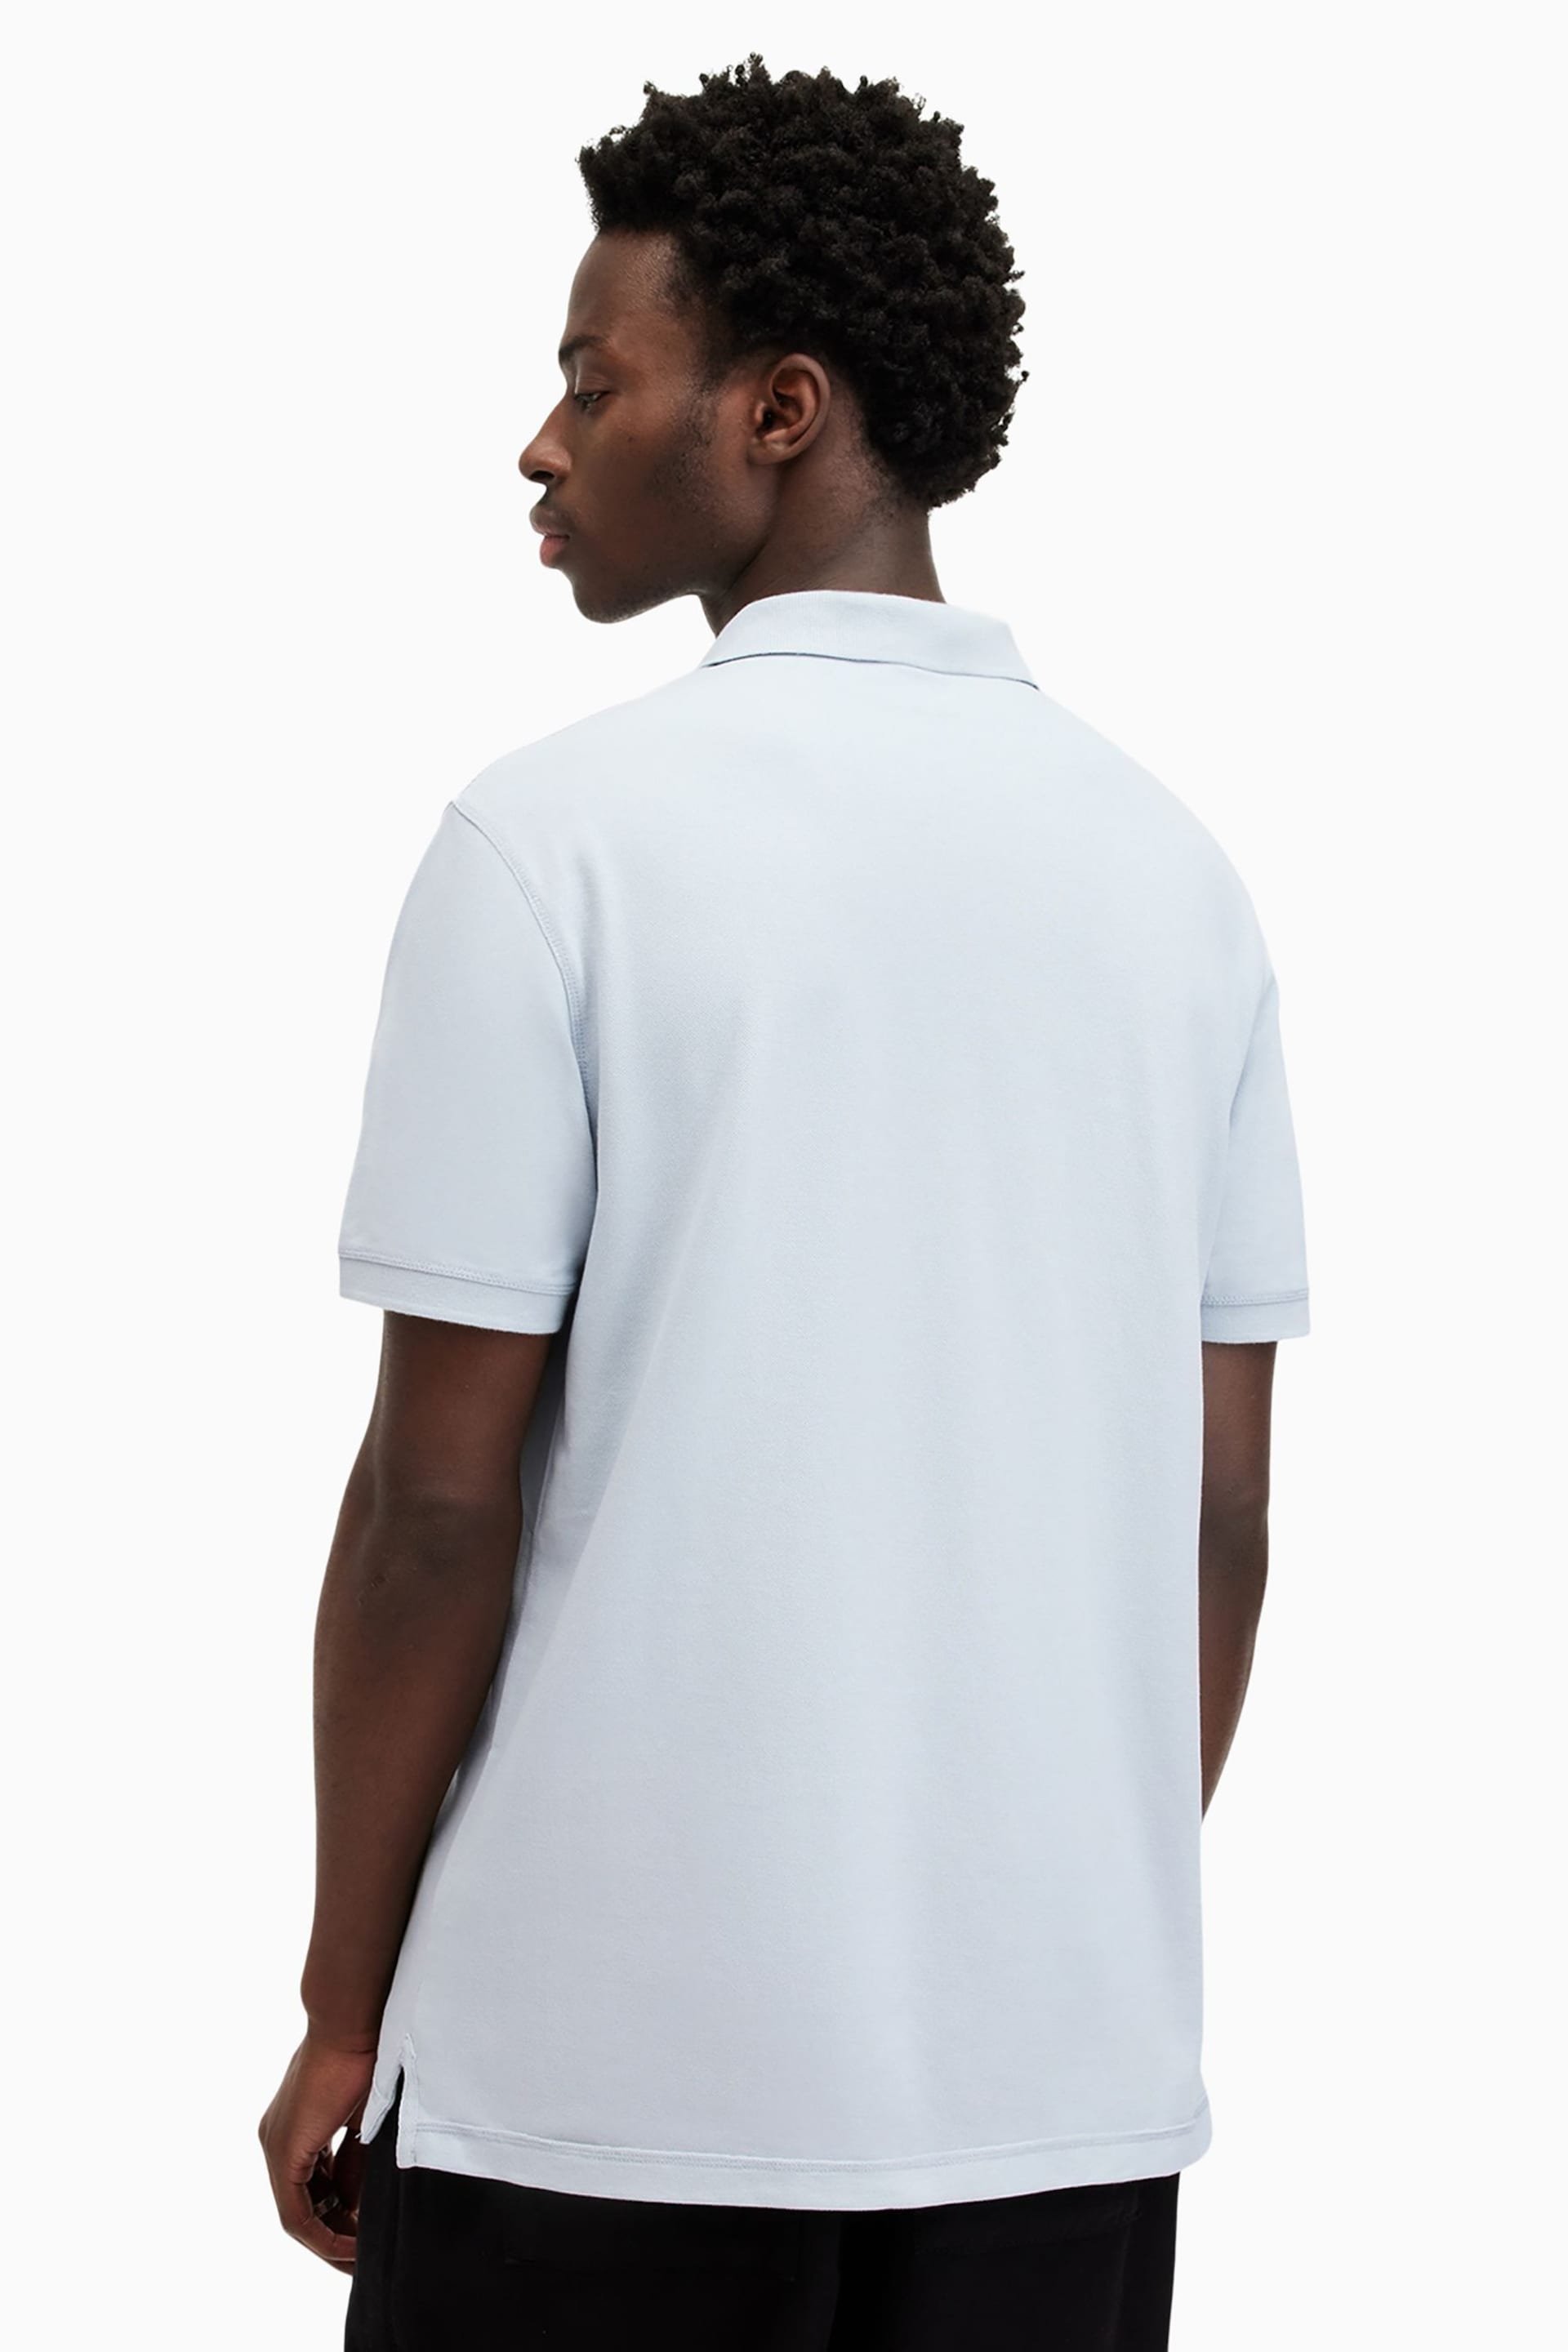 AllSaints Black Reform Short Sleeve Polo Shirt 2 Pack - Image 7 of 7